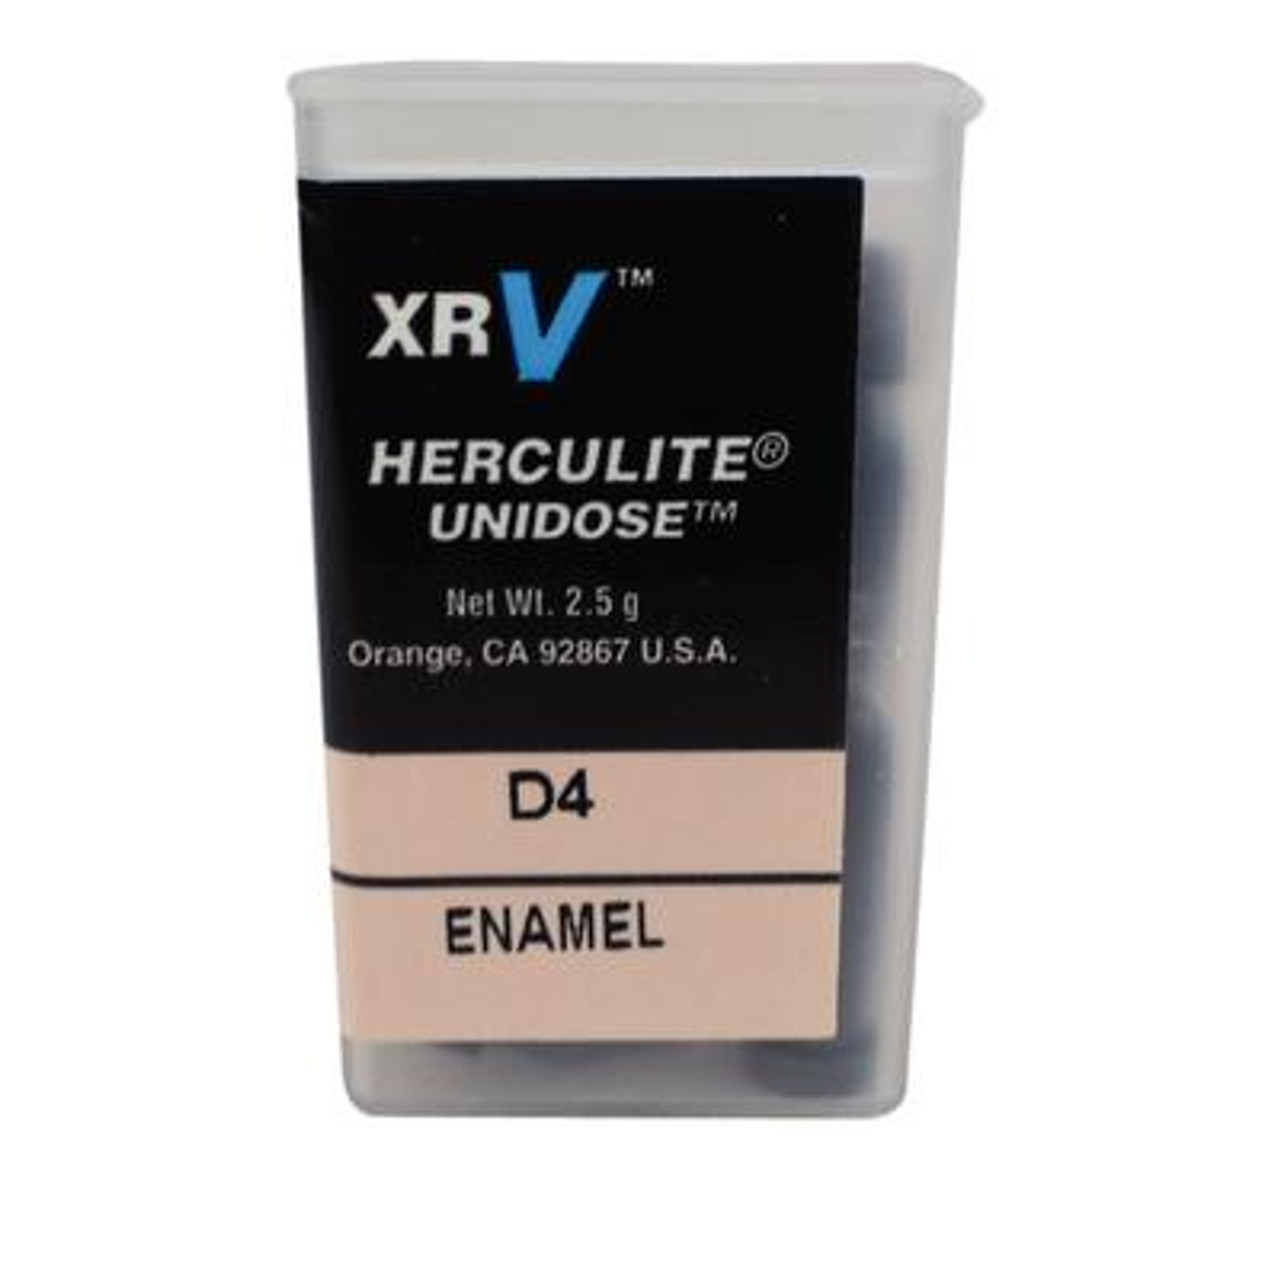 Kerr Herculite XRV Unidose Refills Enamel D4, 20/pk